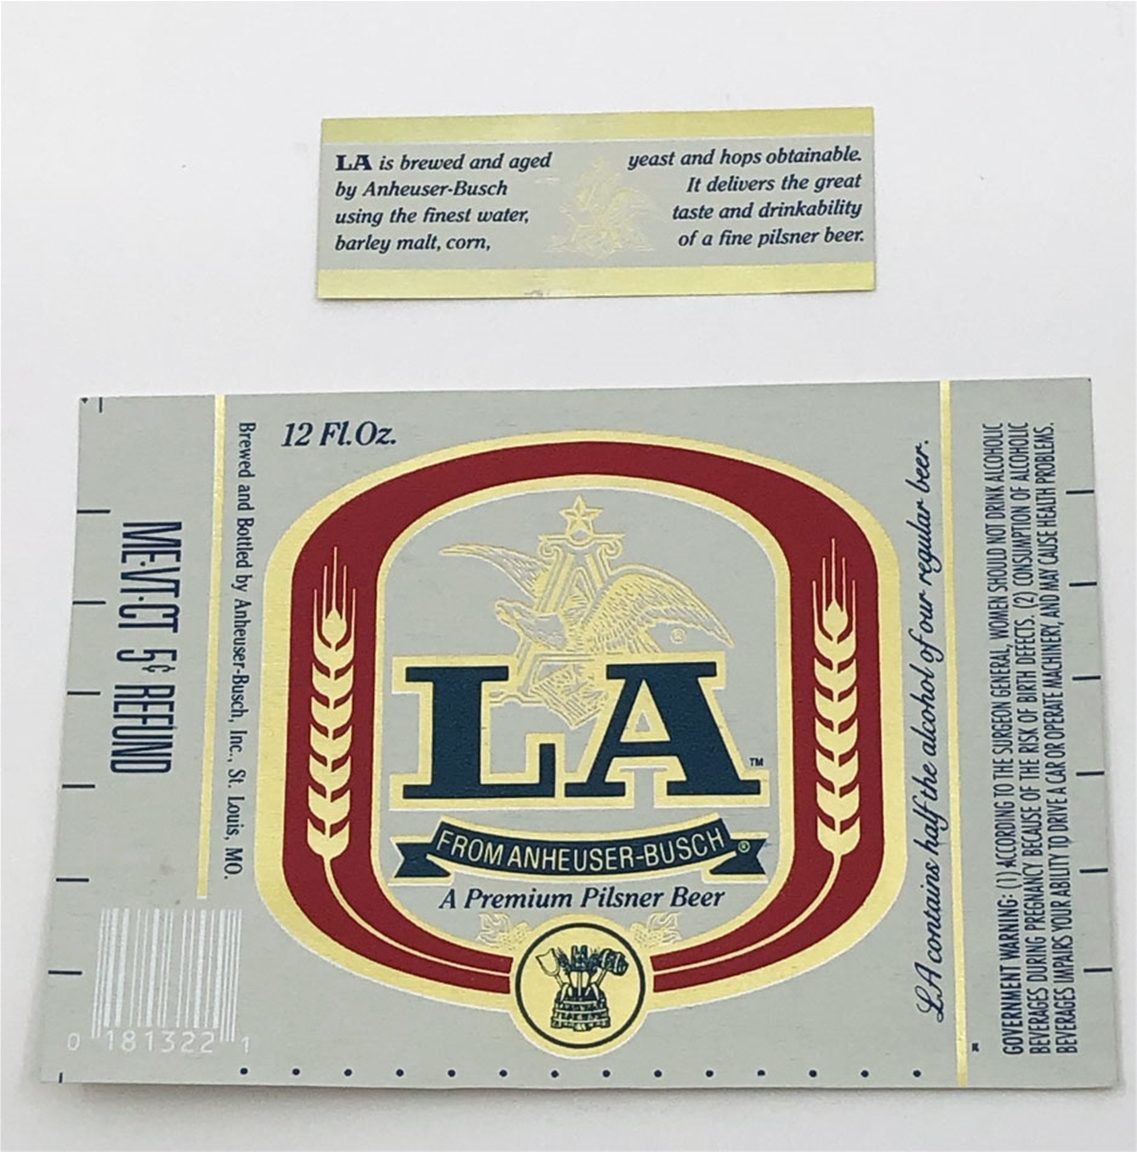 LA Beer Label with neck label